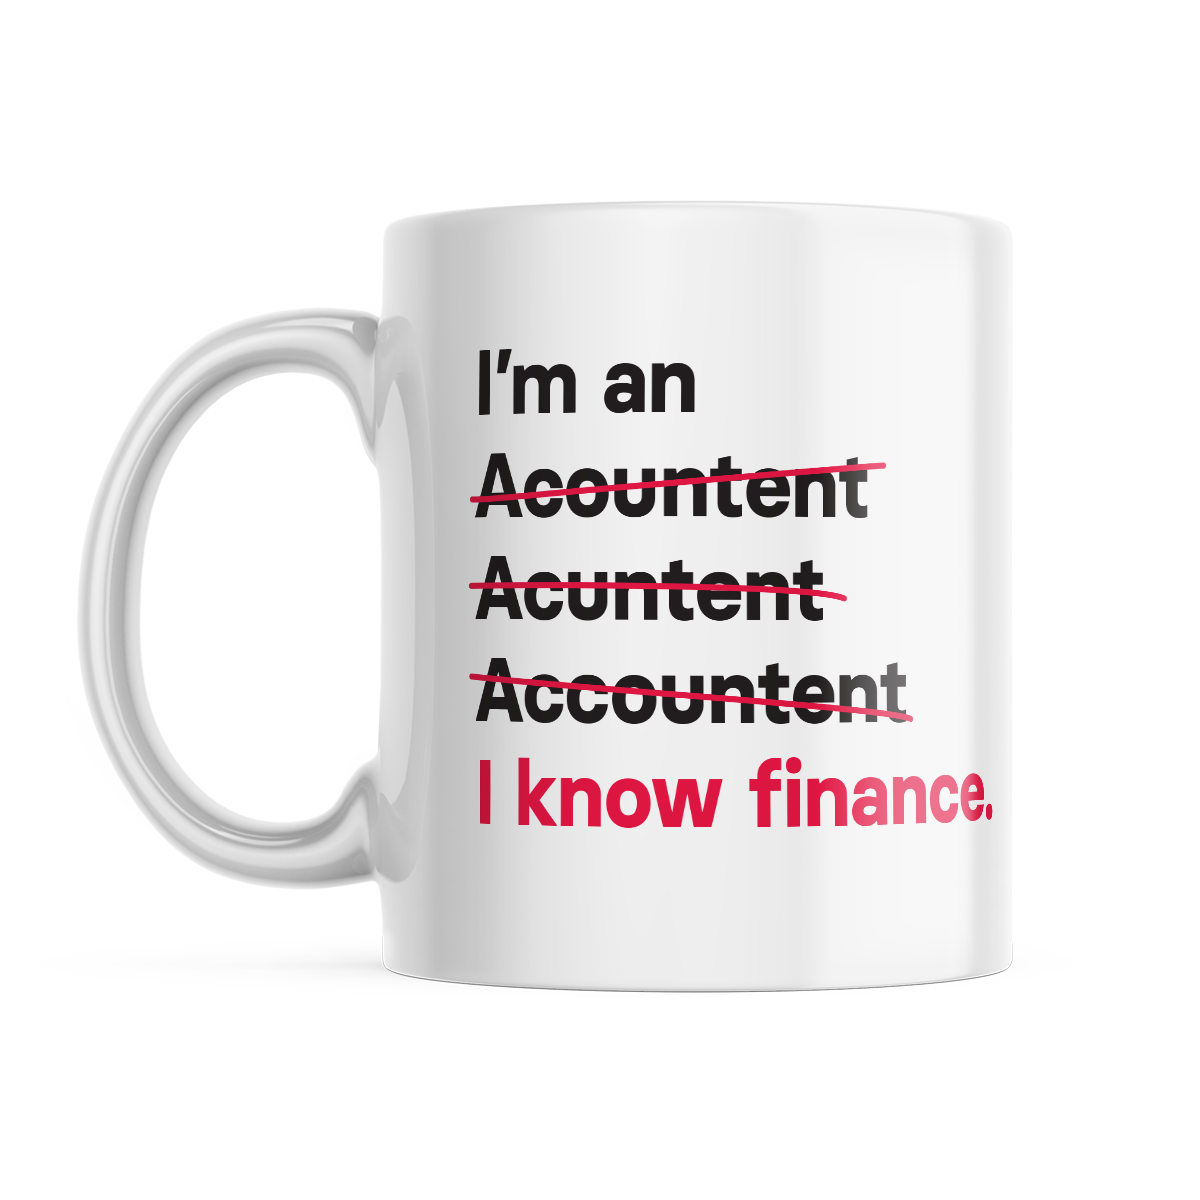 I'm an Accountant